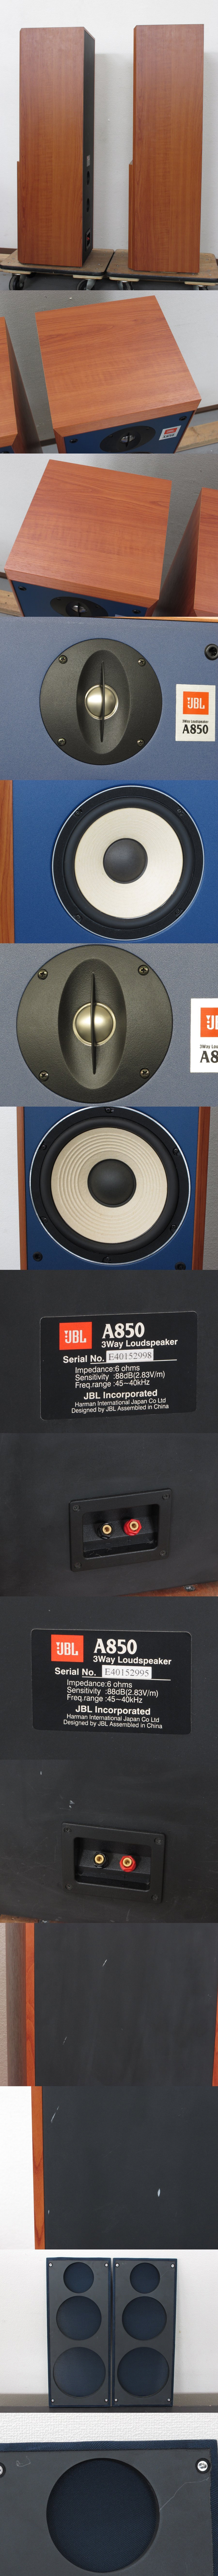 Jbl A850 スピーカー ペア 359 中古オーディオ買取 販売 通販のショップアフロオーディオ横浜